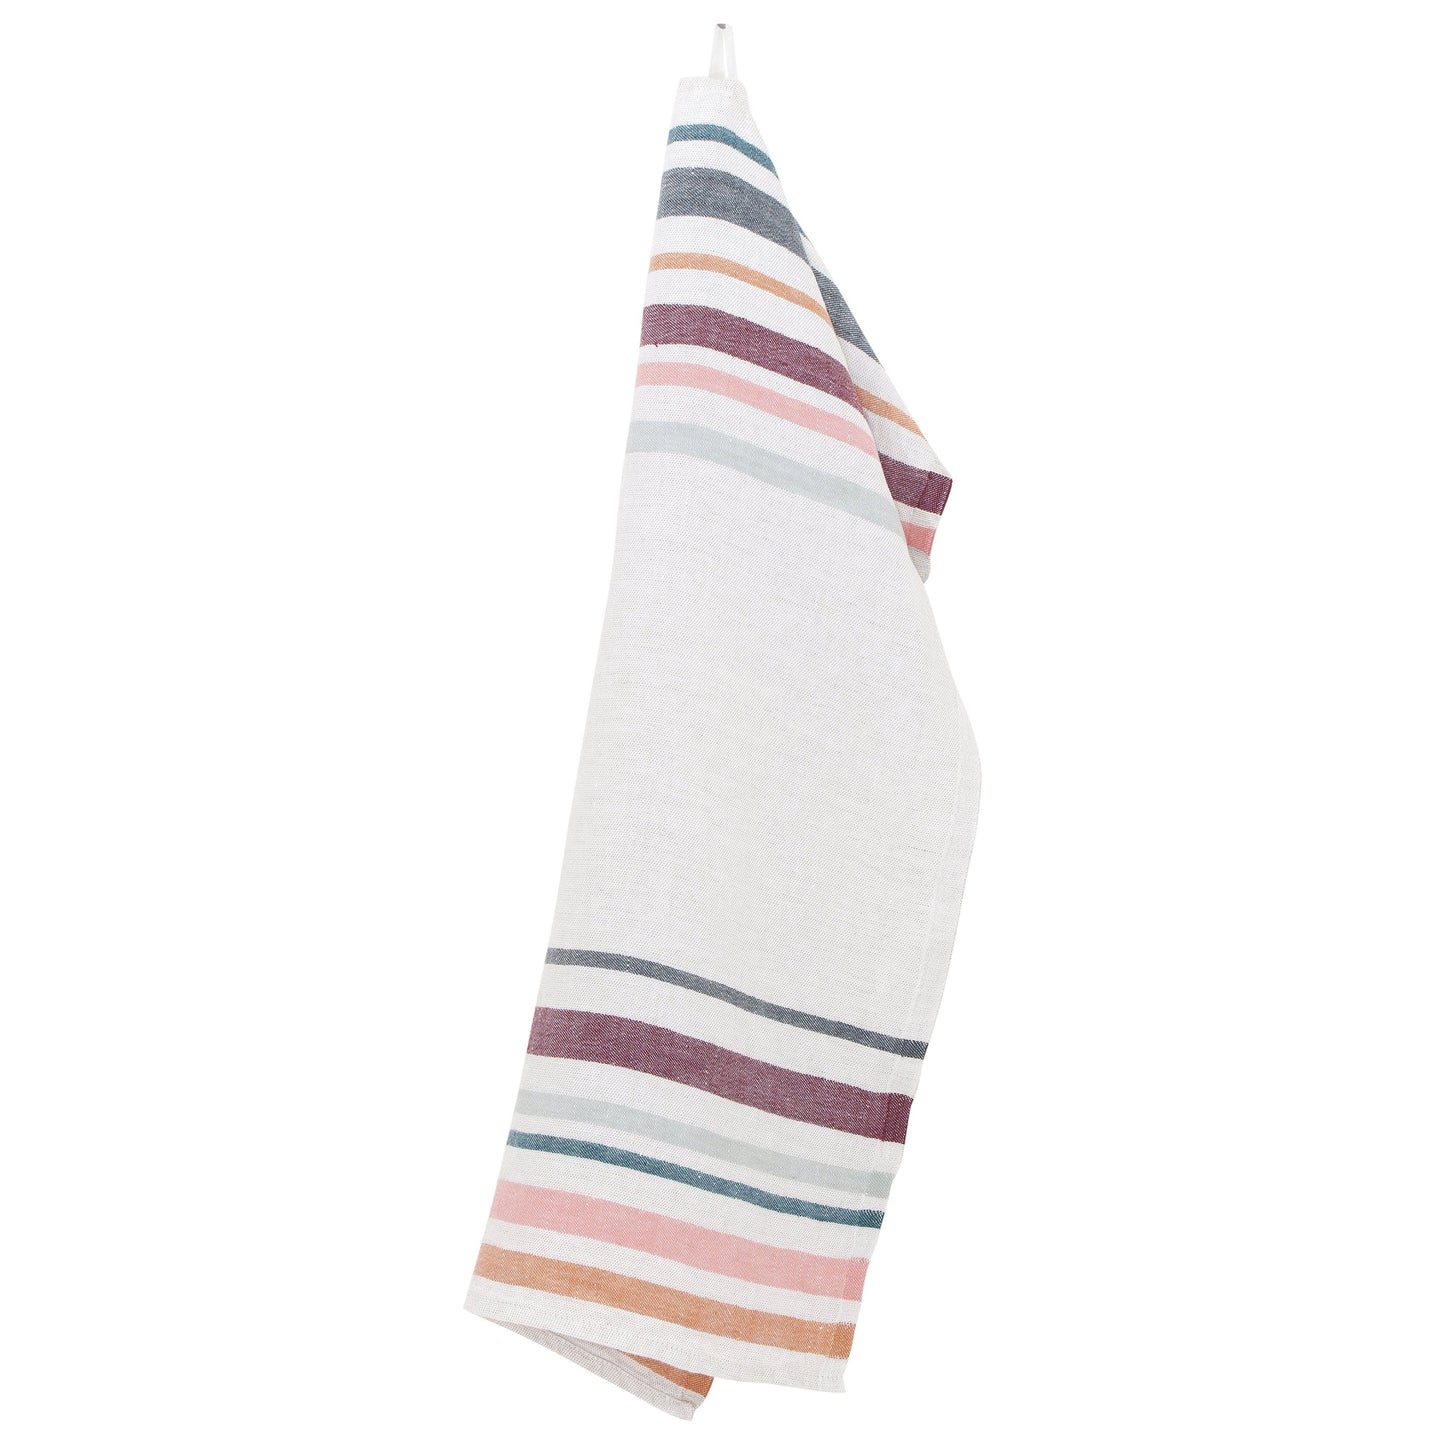 LAPUAN - LEWA LINEN HAND TOWEL. GREY + BORDEAUX